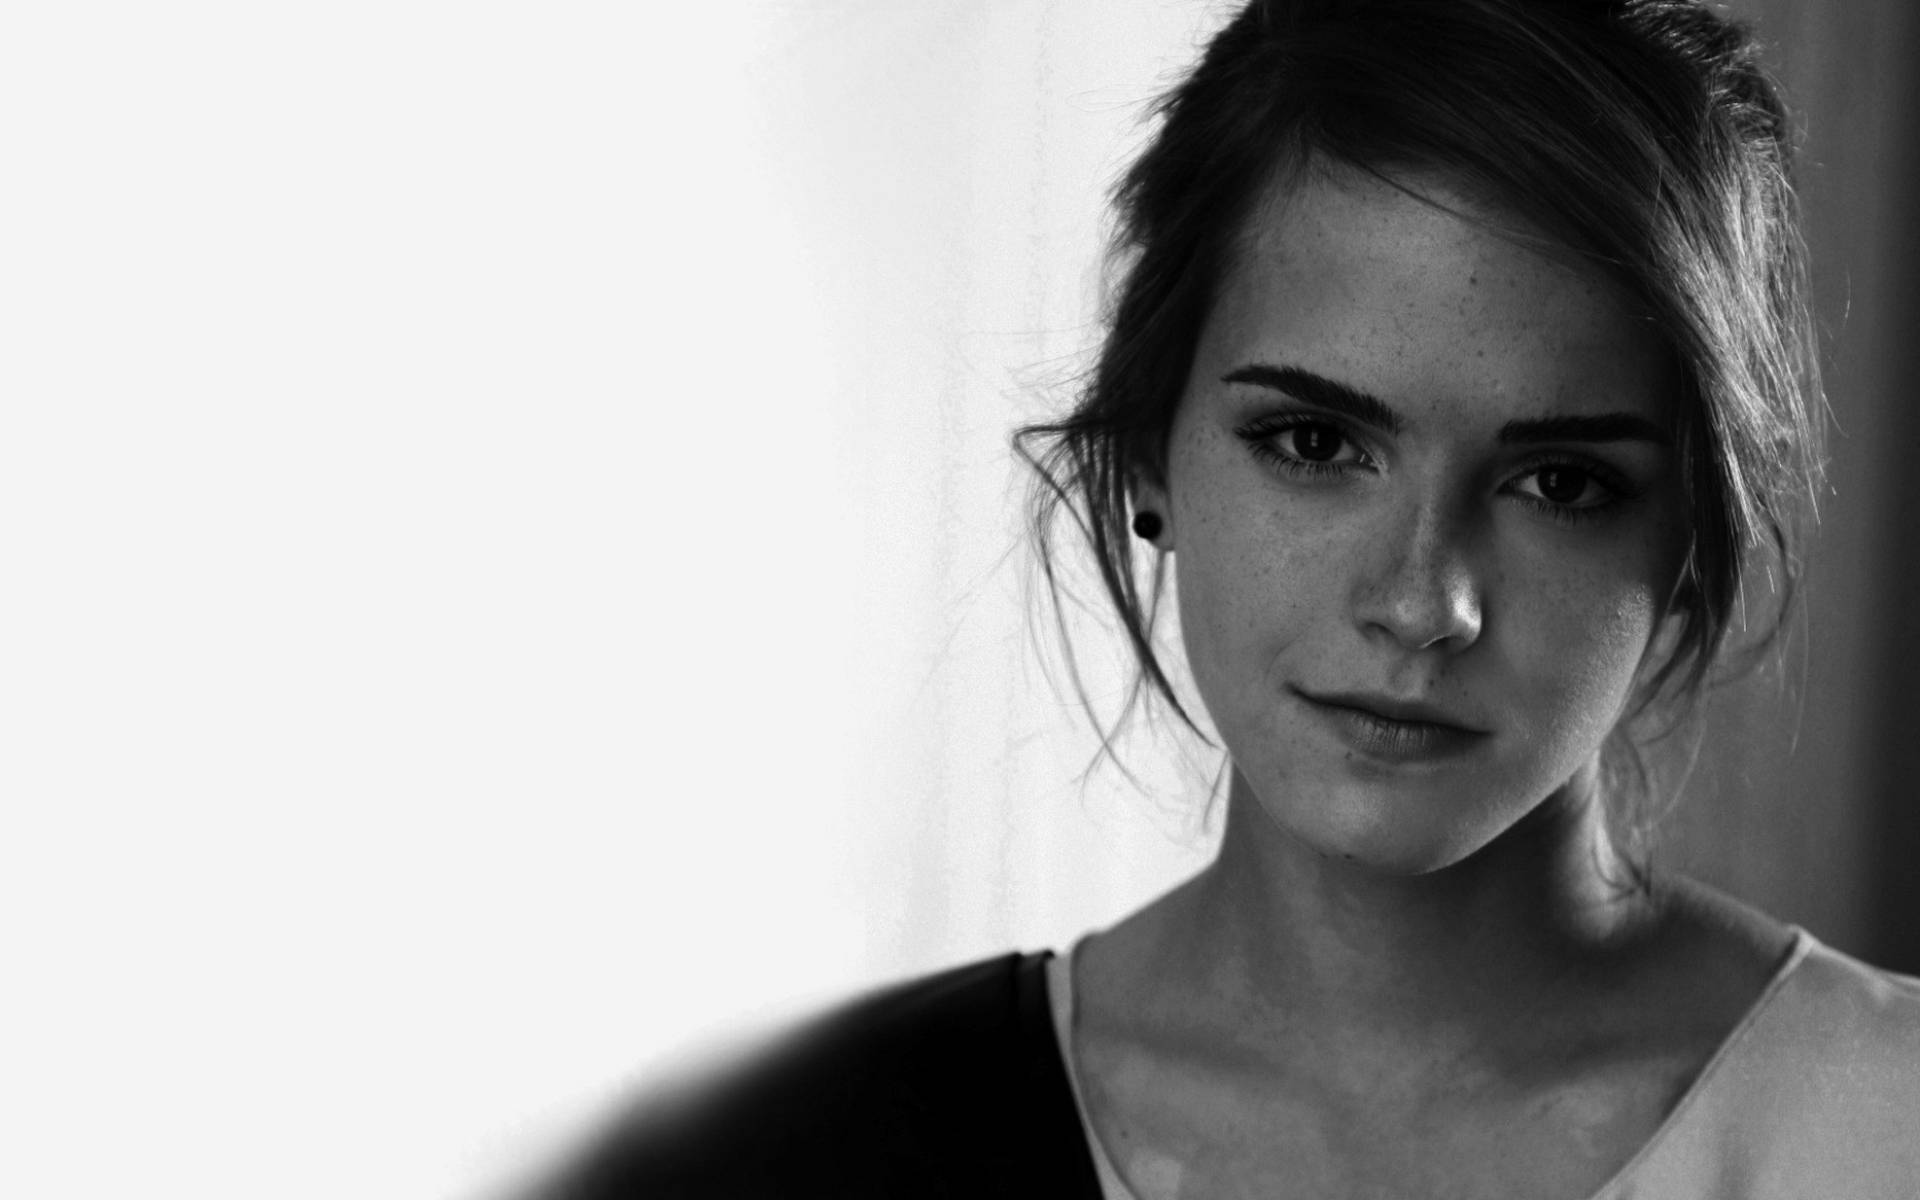 Stunning Emma Watson Portrait